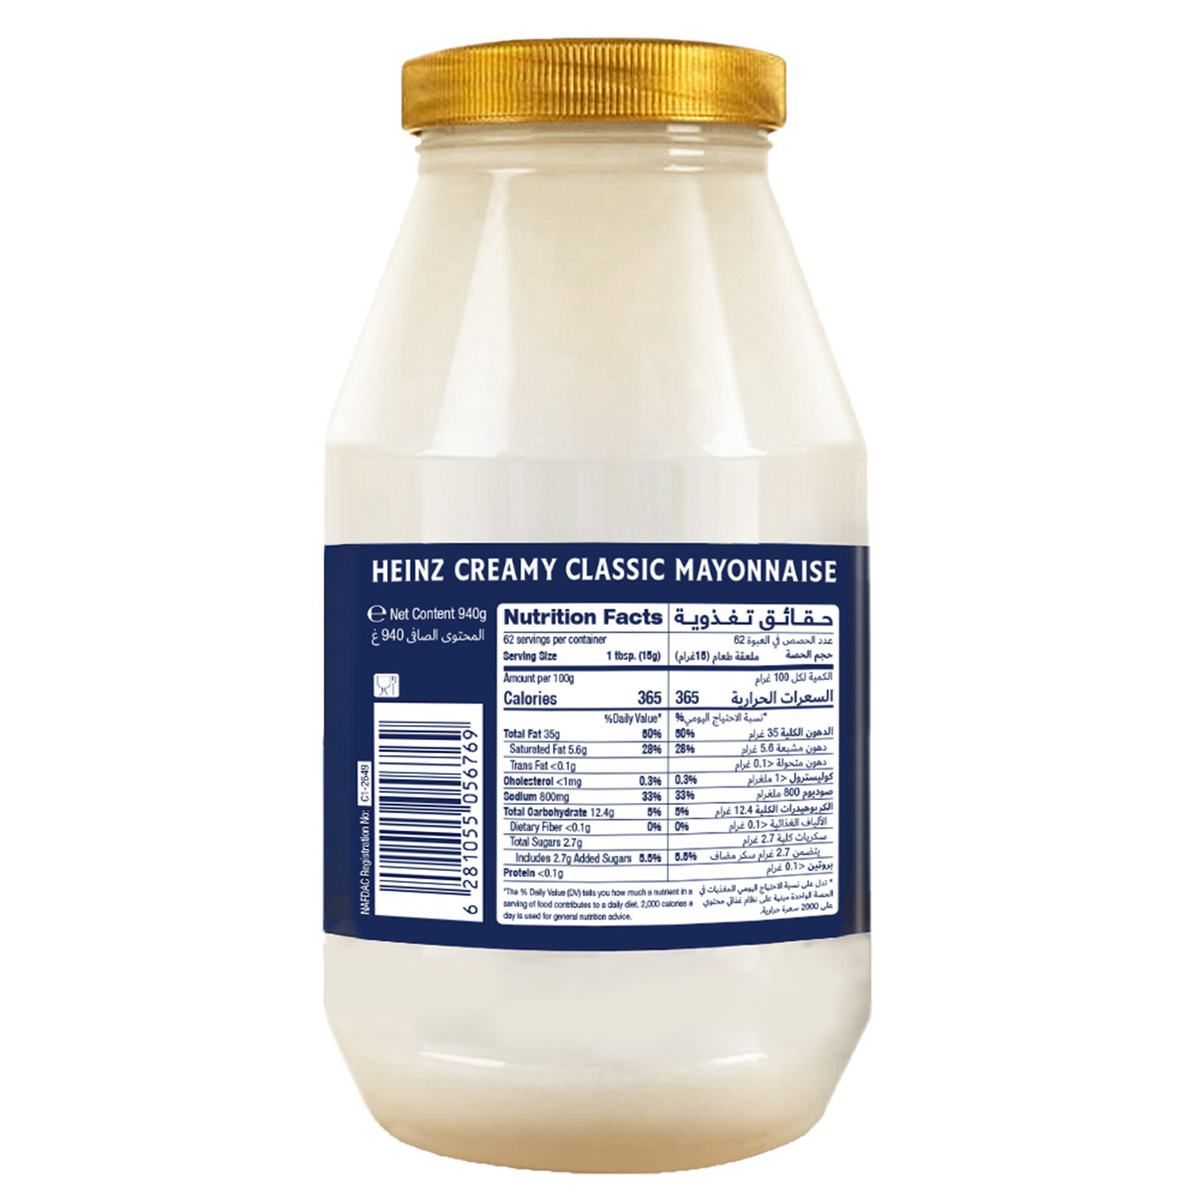 Heinz Creamy Classic Mayonnaise Value Pack 940g